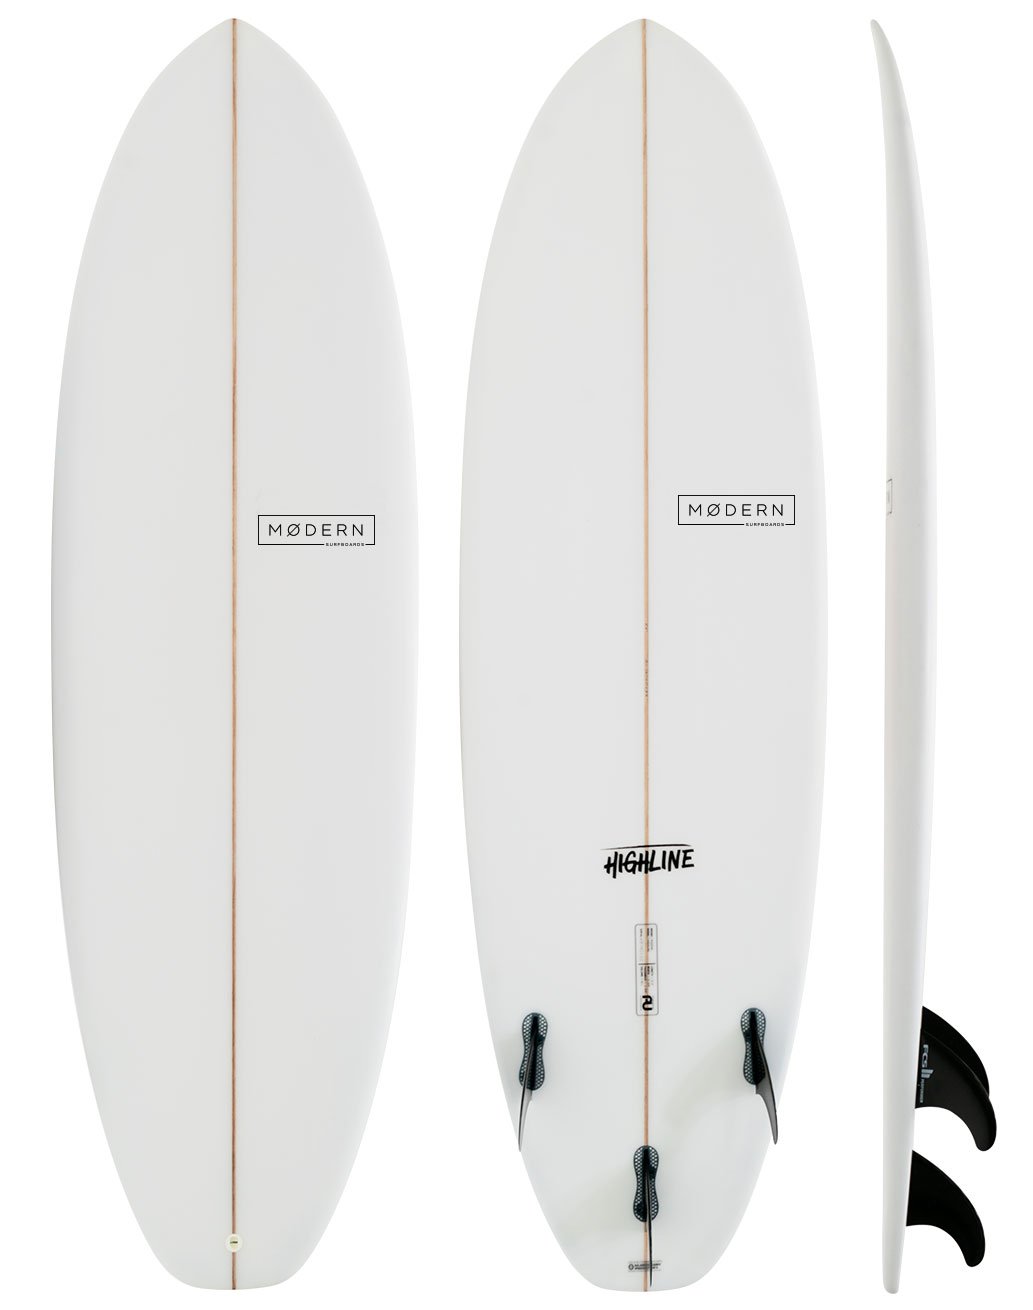 MODERN HIGHLINE 6'2" SURFBOARD